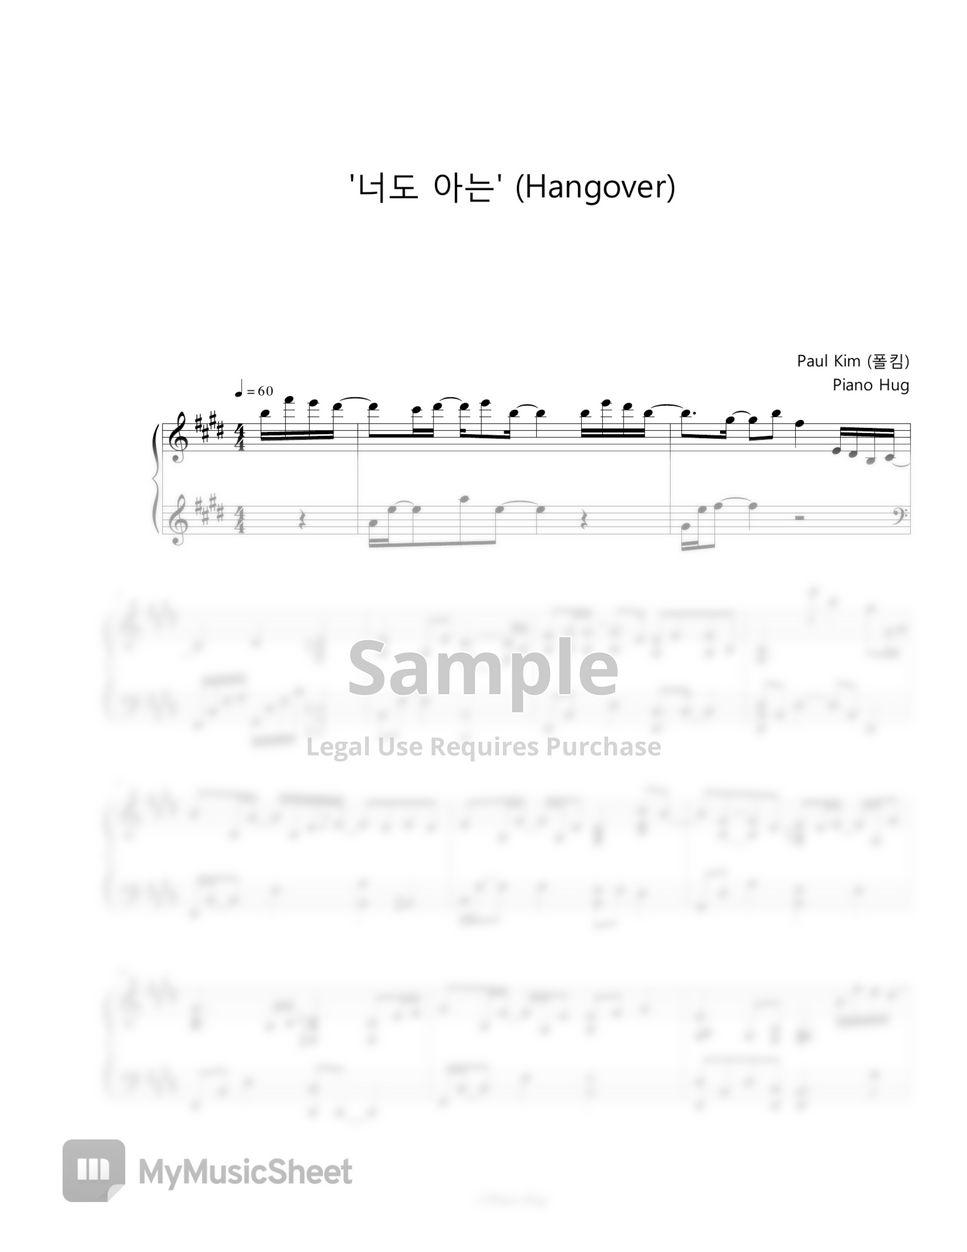 Paul Kim (폴킴) - Hangover '너도 아는' by Piano Hug